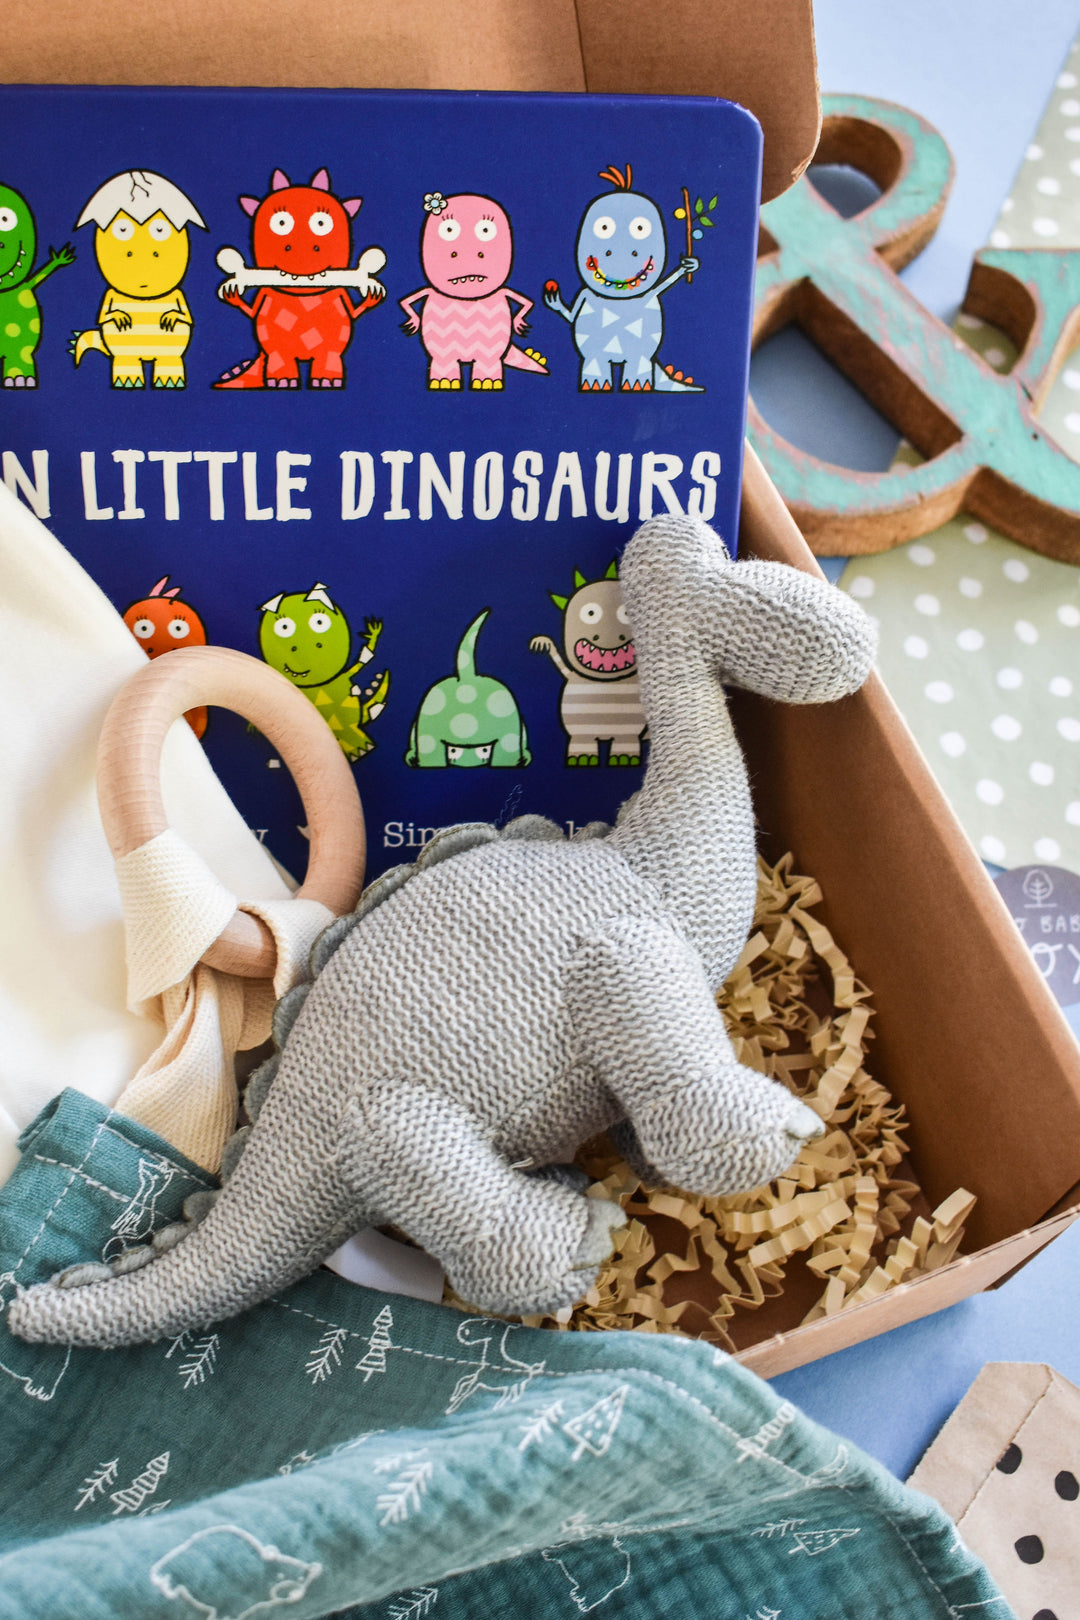 Roarr goes the Dinosaur - New Baby Gift Box - Eco BabyBox